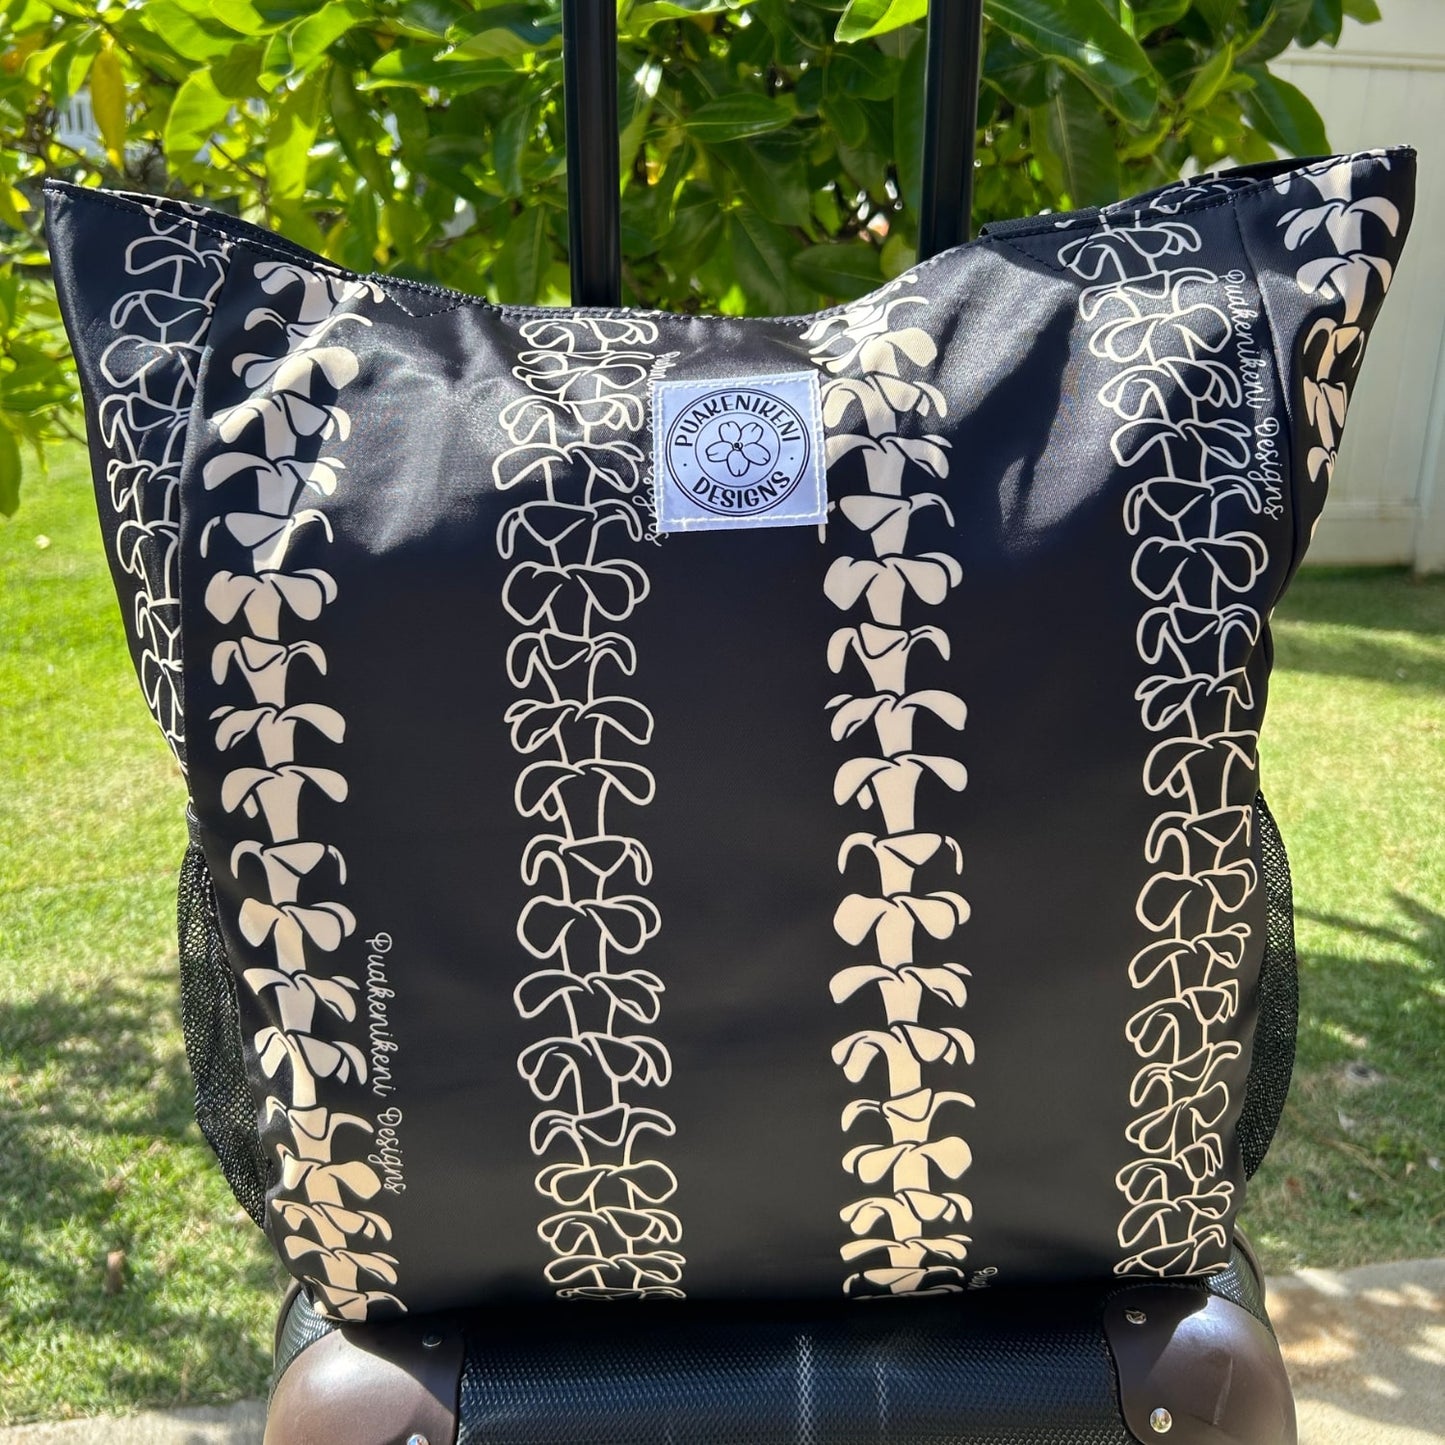 Holoholo Bag for travel from Puakenikeni Designs - use for beach, diaper bag, handbag, hula bag on a rolling suitcase